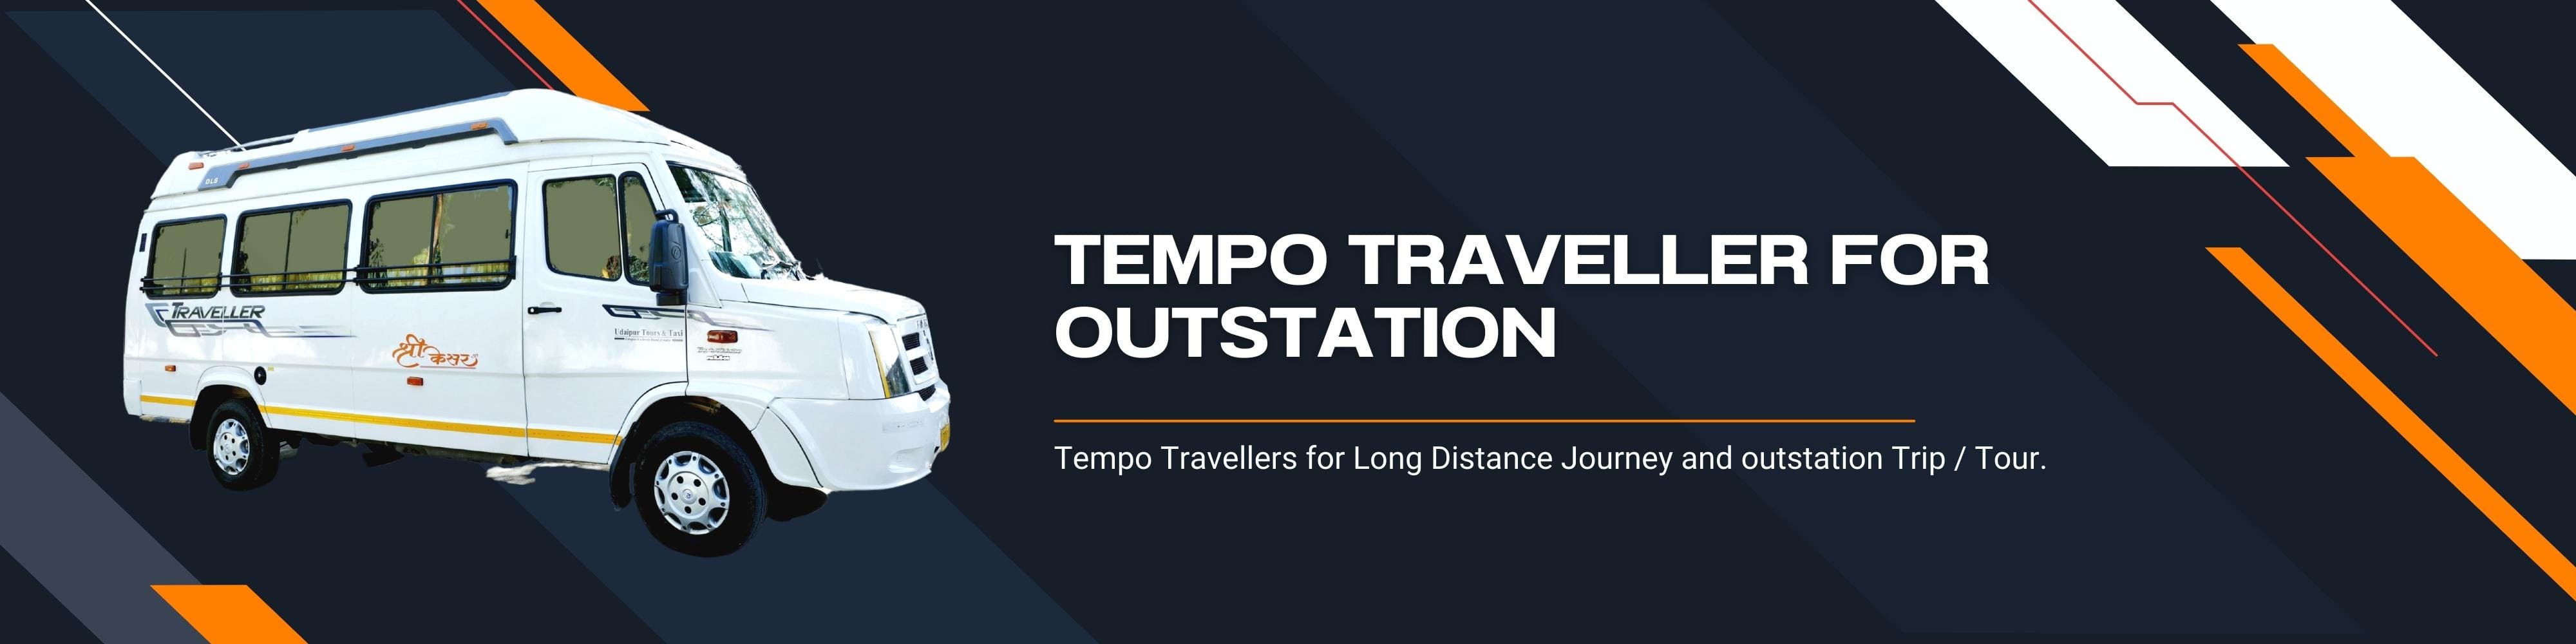 Tempo Traveller For Outstation